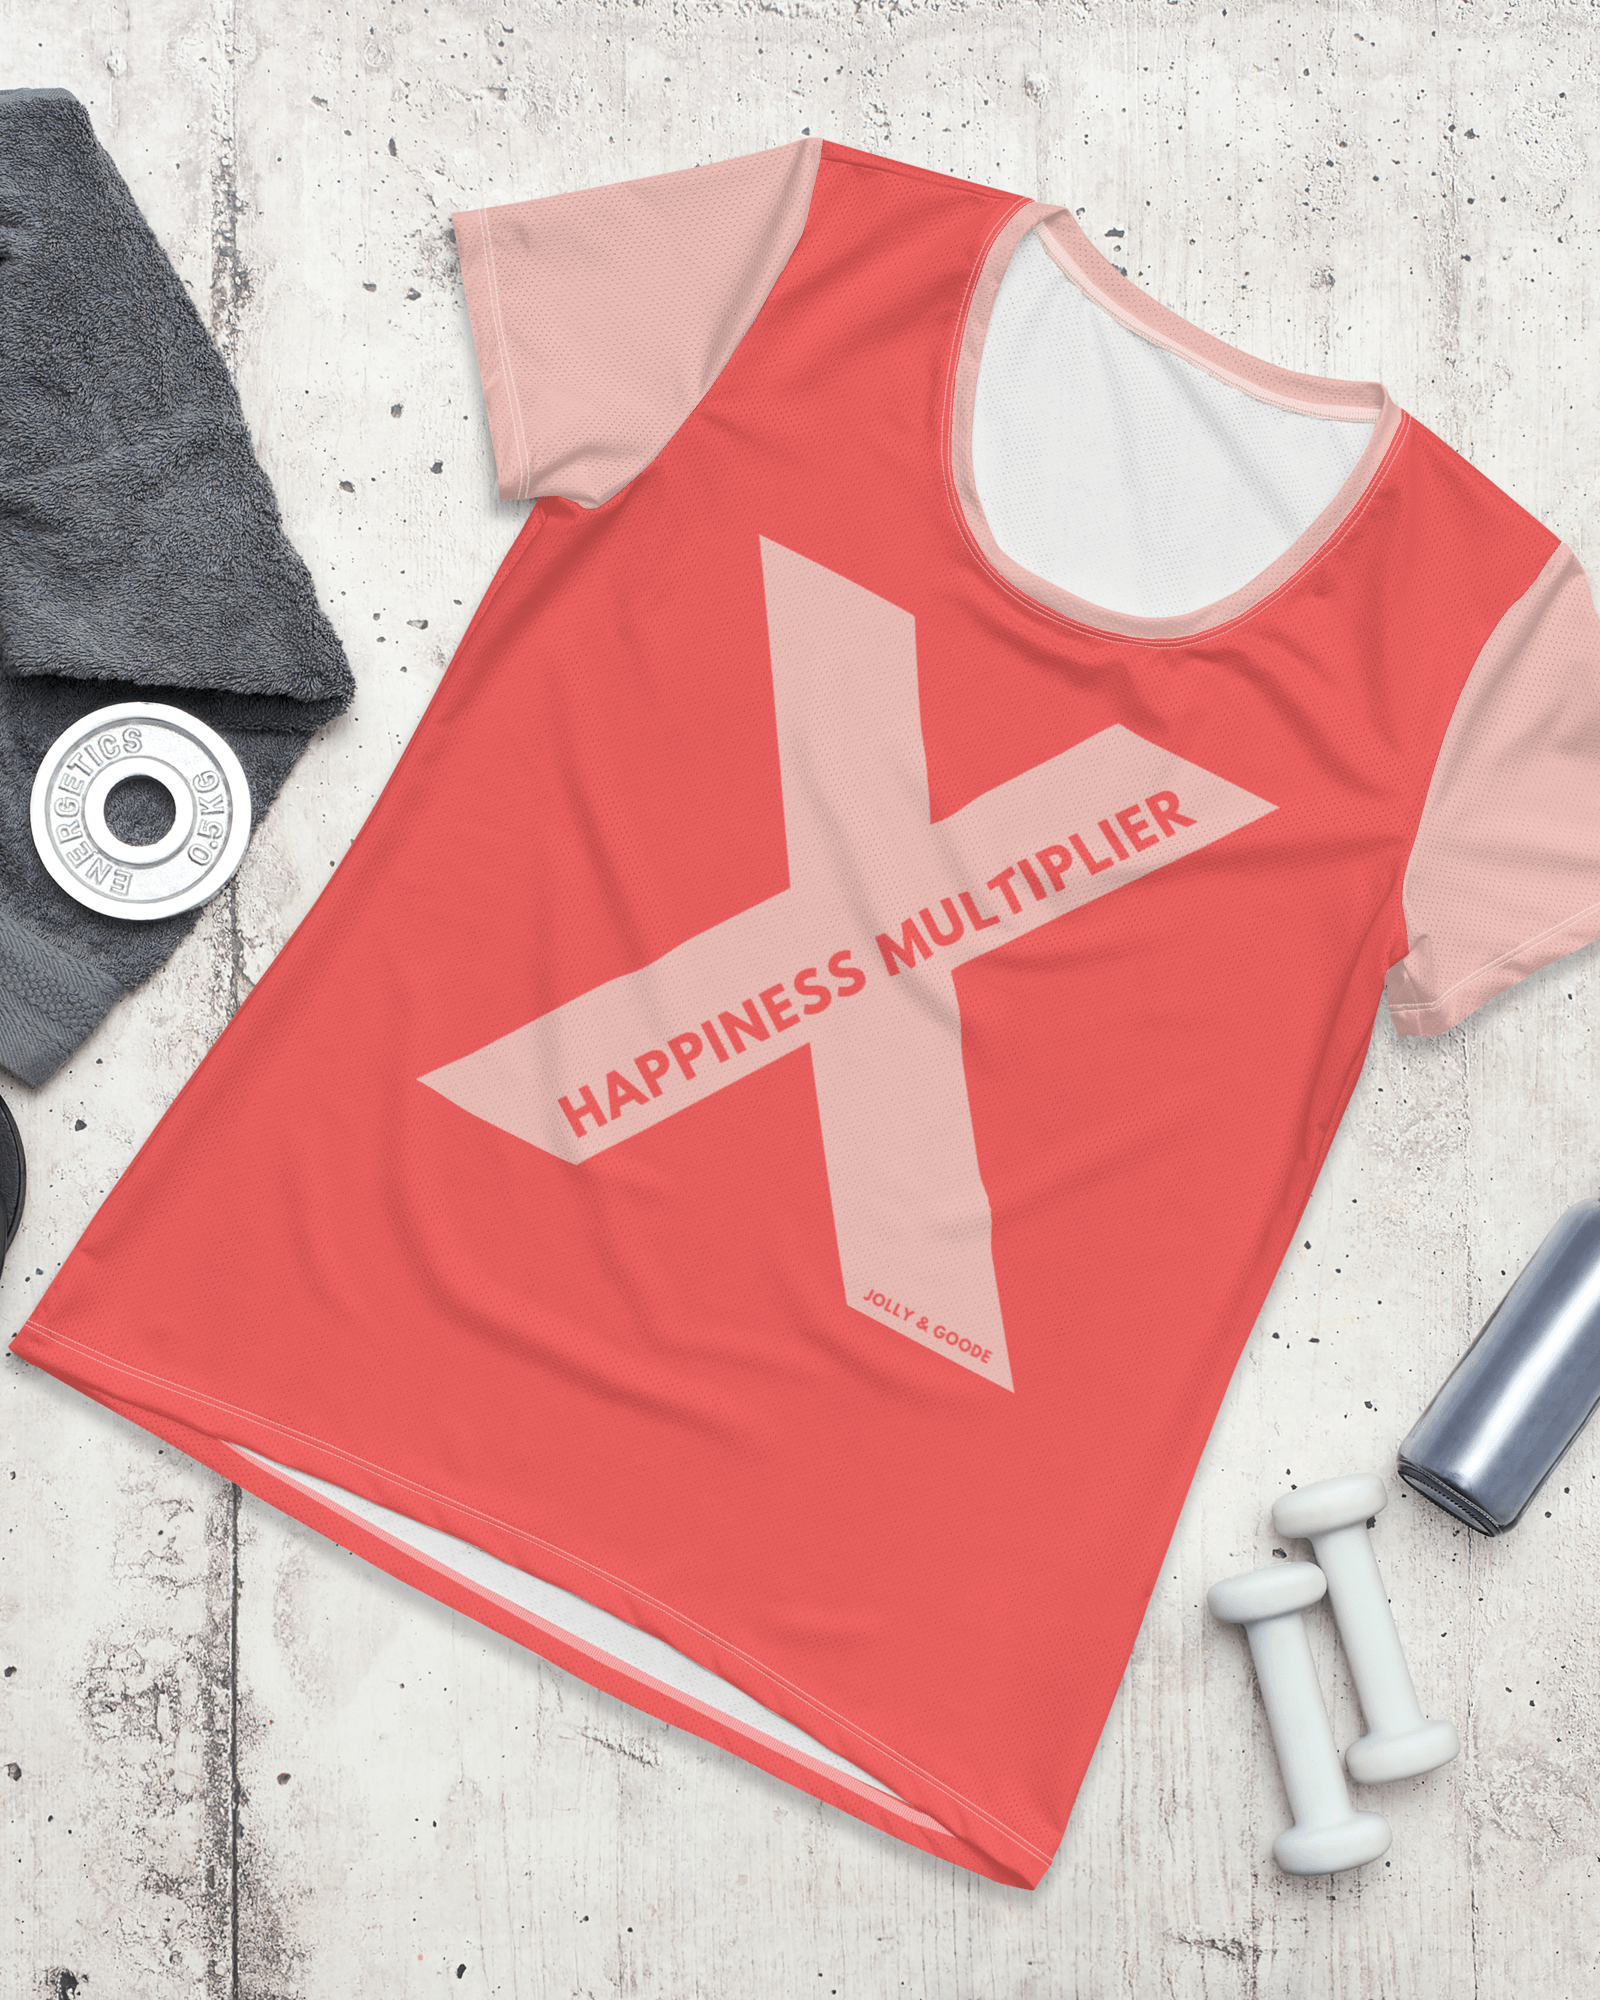 Happiness Multiplier Women's Athletic Shirt XS Crop Tops Jolly & Goode